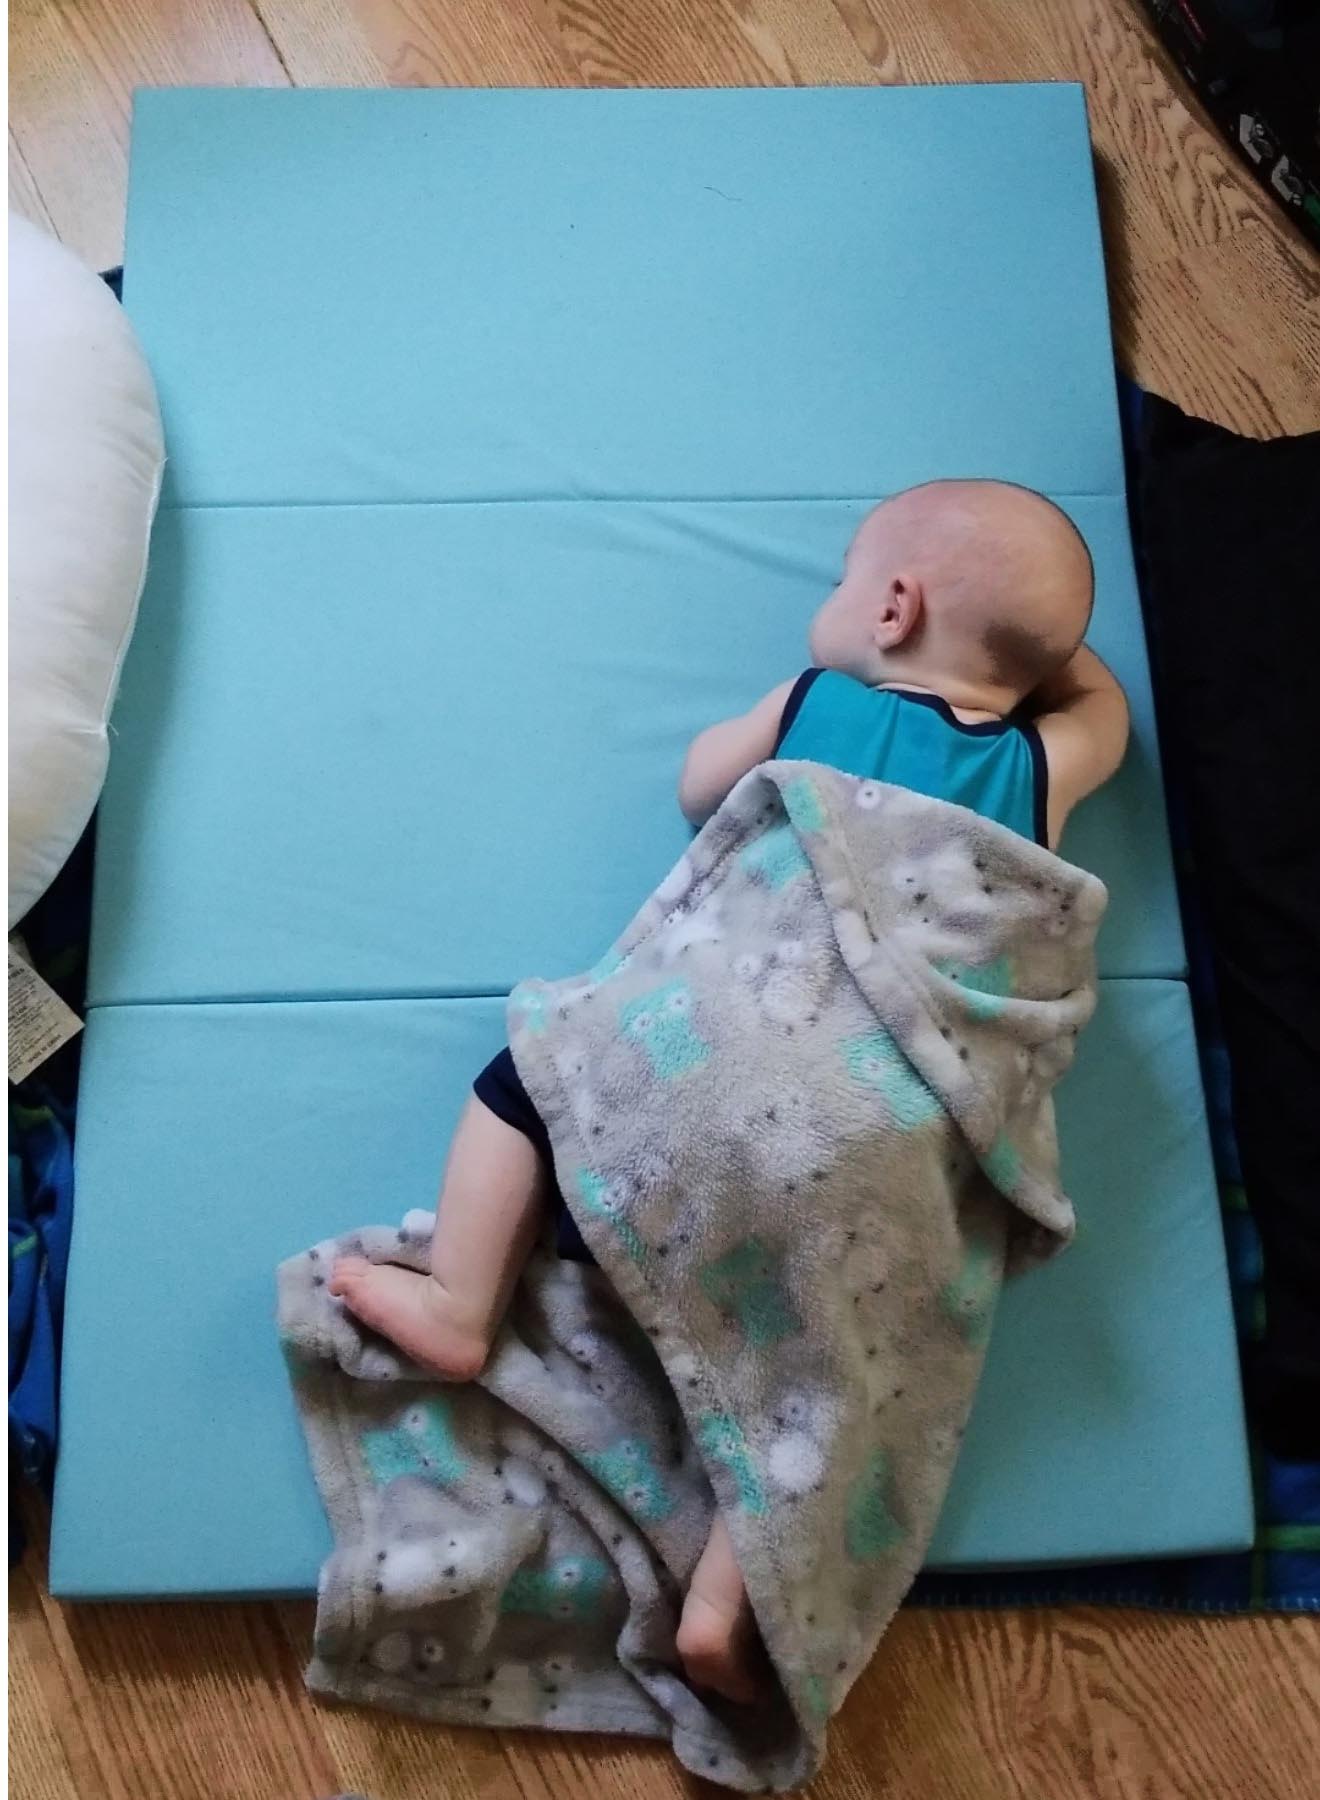 My son went to sleep on the mattress!